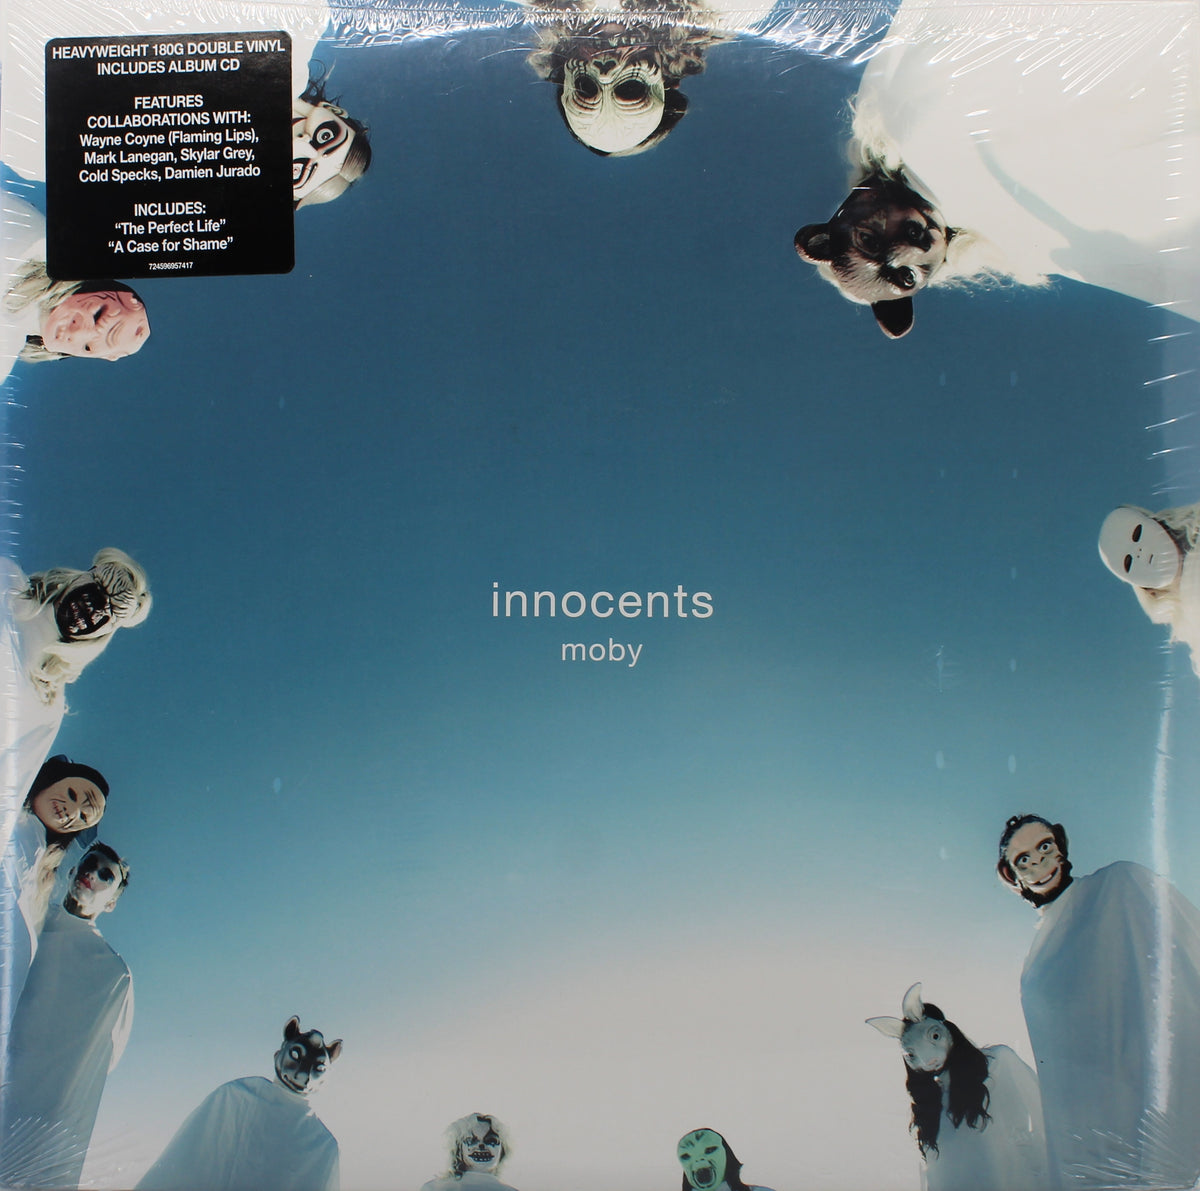 Moby - Innocents, 2 x Vinyl, LP, Album, 180g, Audiophile, USA 2013